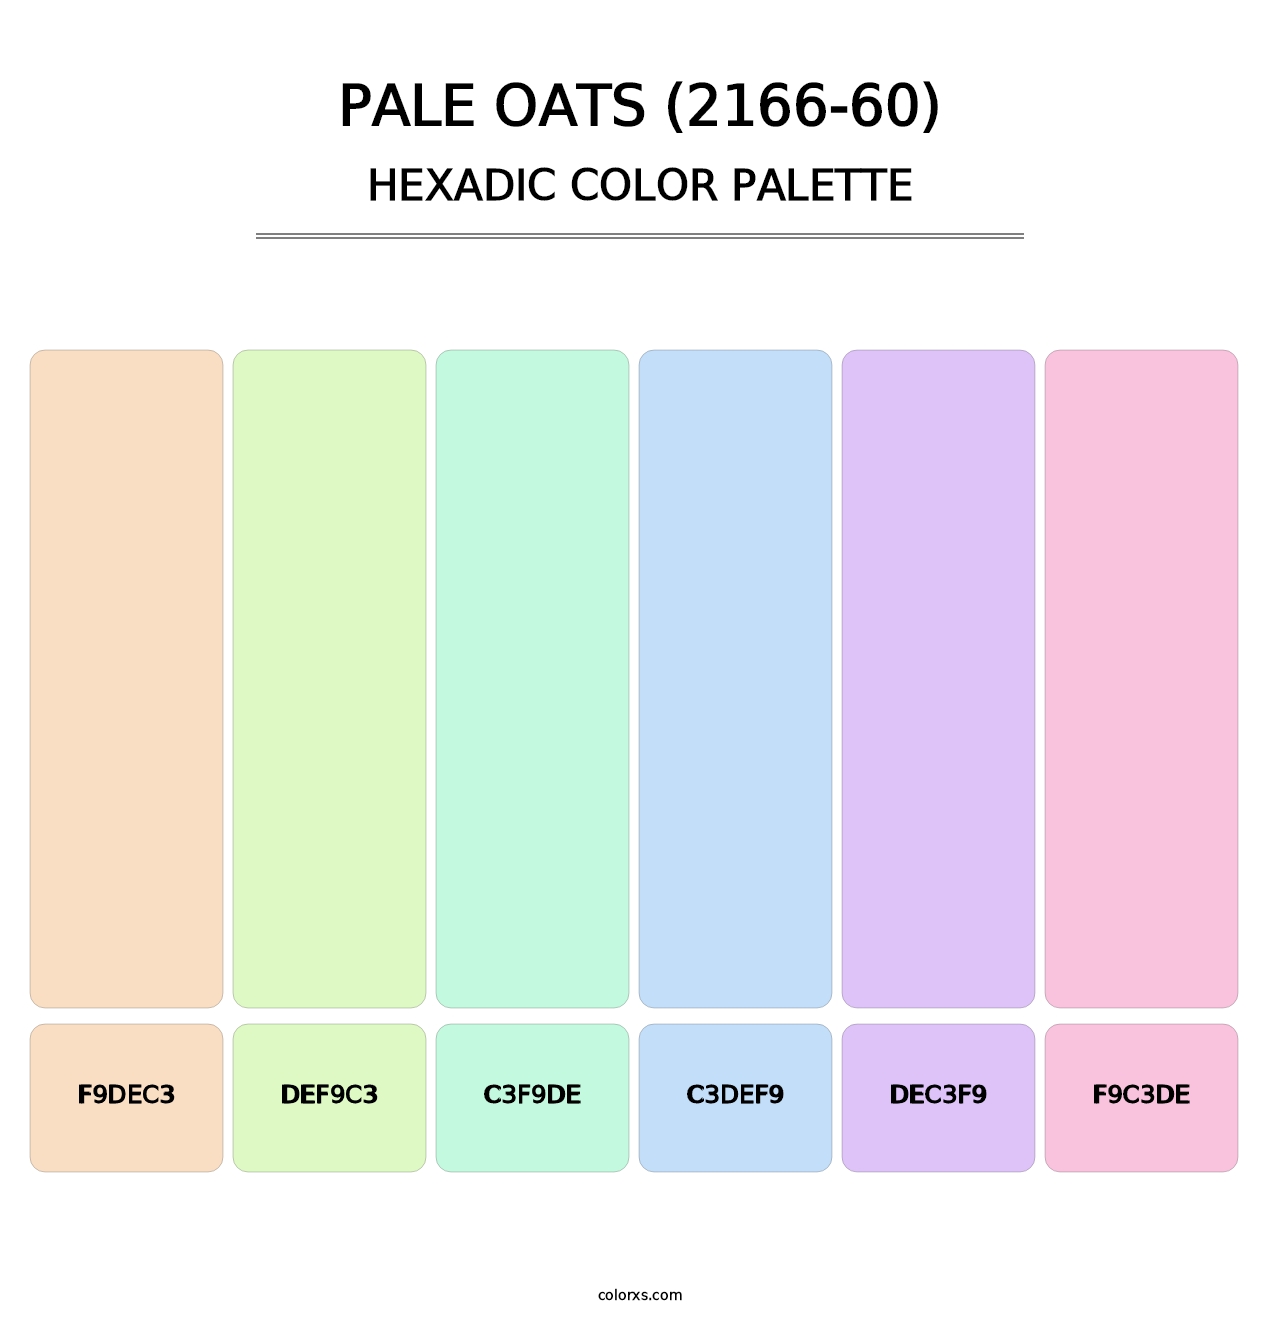 Pale Oats (2166-60) - Hexadic Color Palette